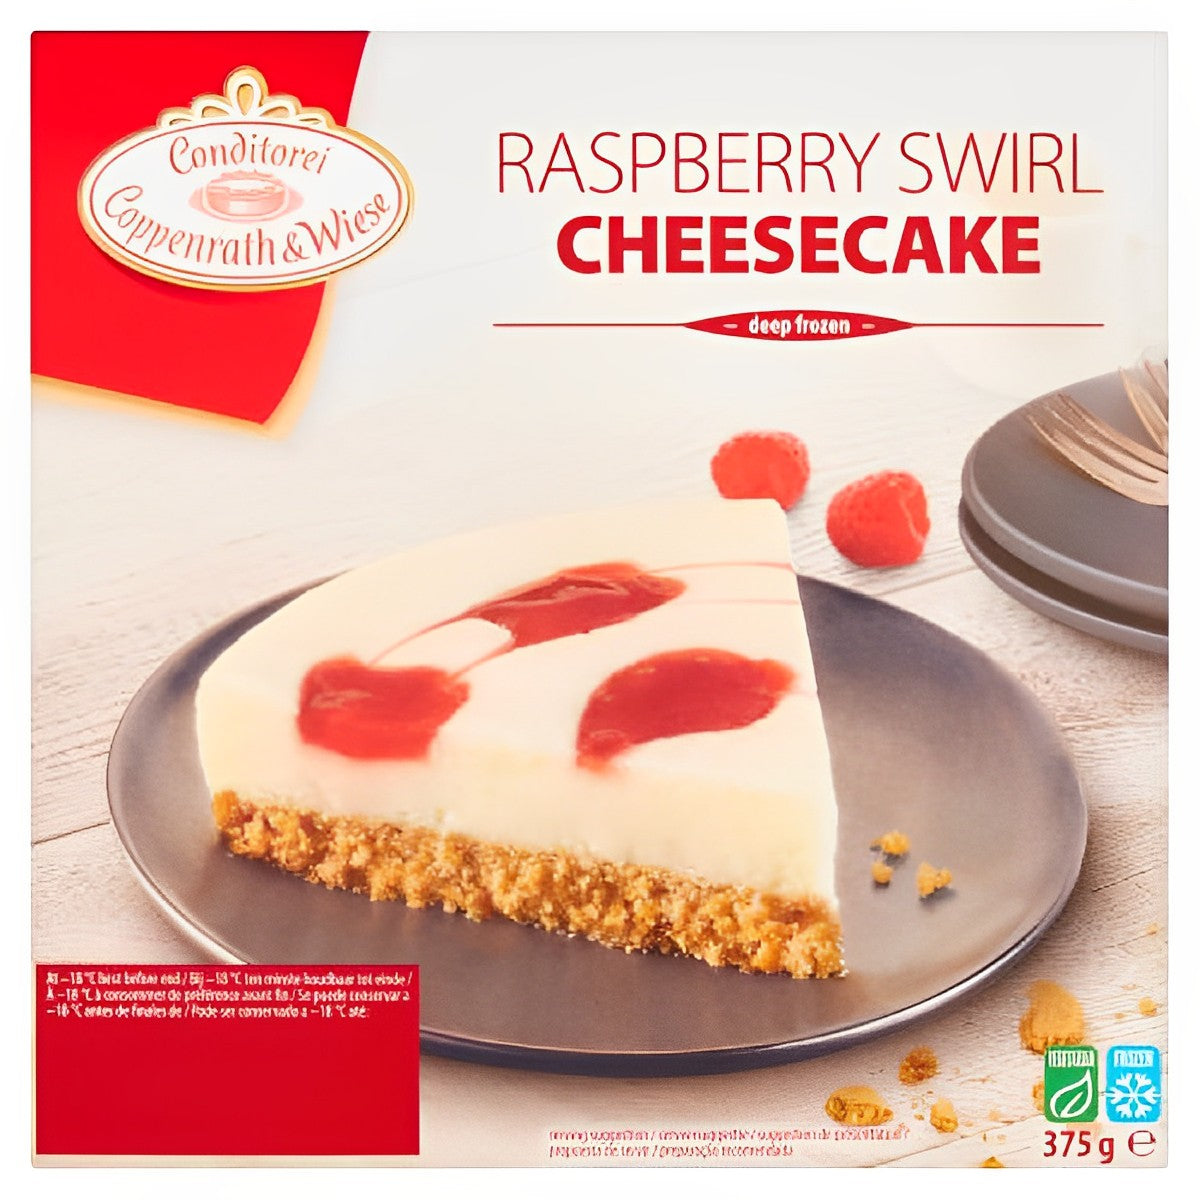 Conditorei Coppenrath & Wiese - Raspberry Swirl Cheesecake - 375g - Continental Food Store